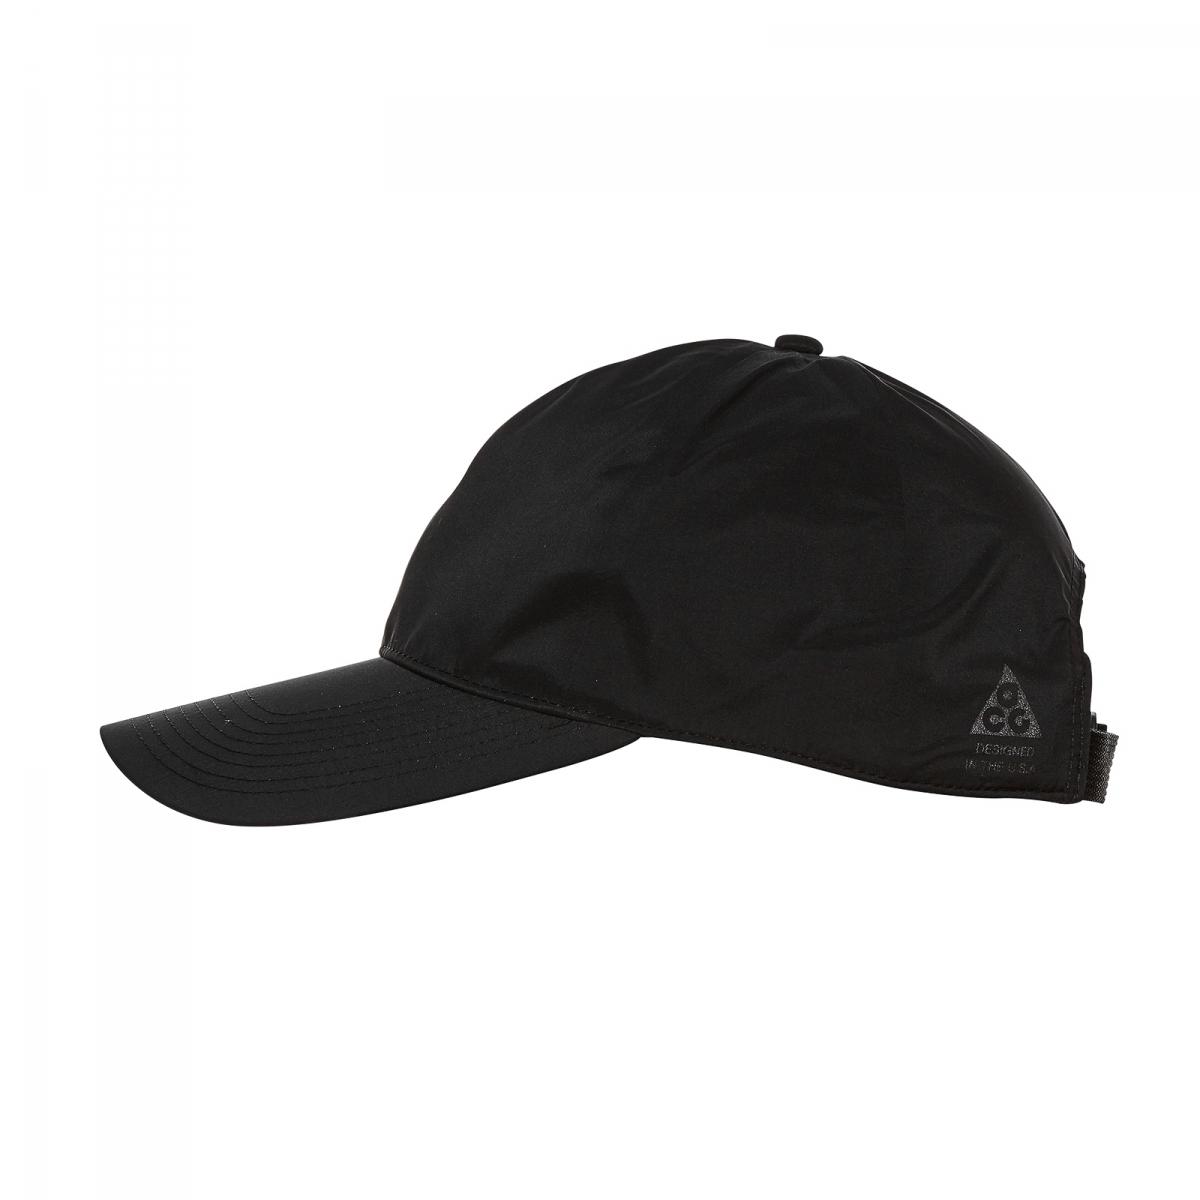 Nike Waterproof Cap in Black for Men - Lyst